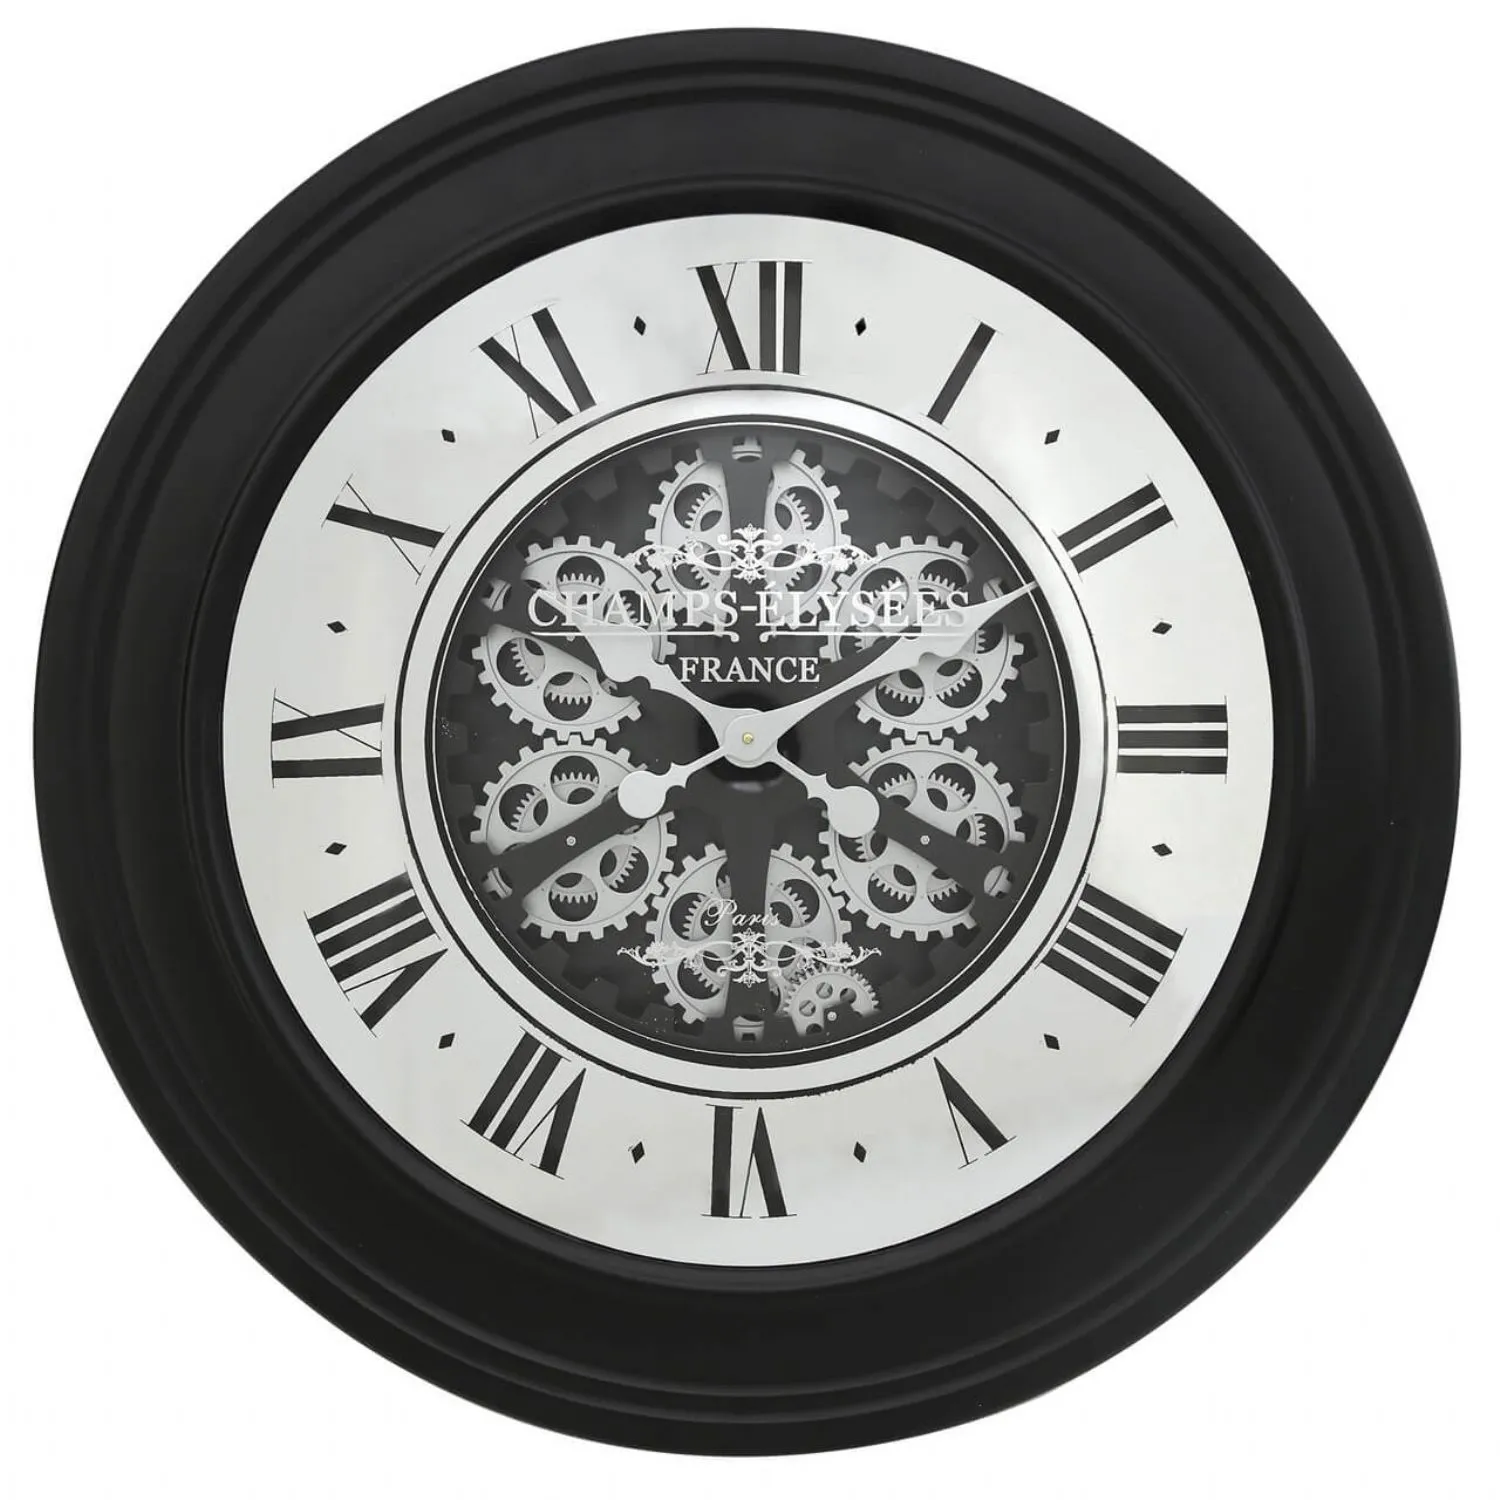 80cm Black And Mirror Gears Roman Dial Wall Clock